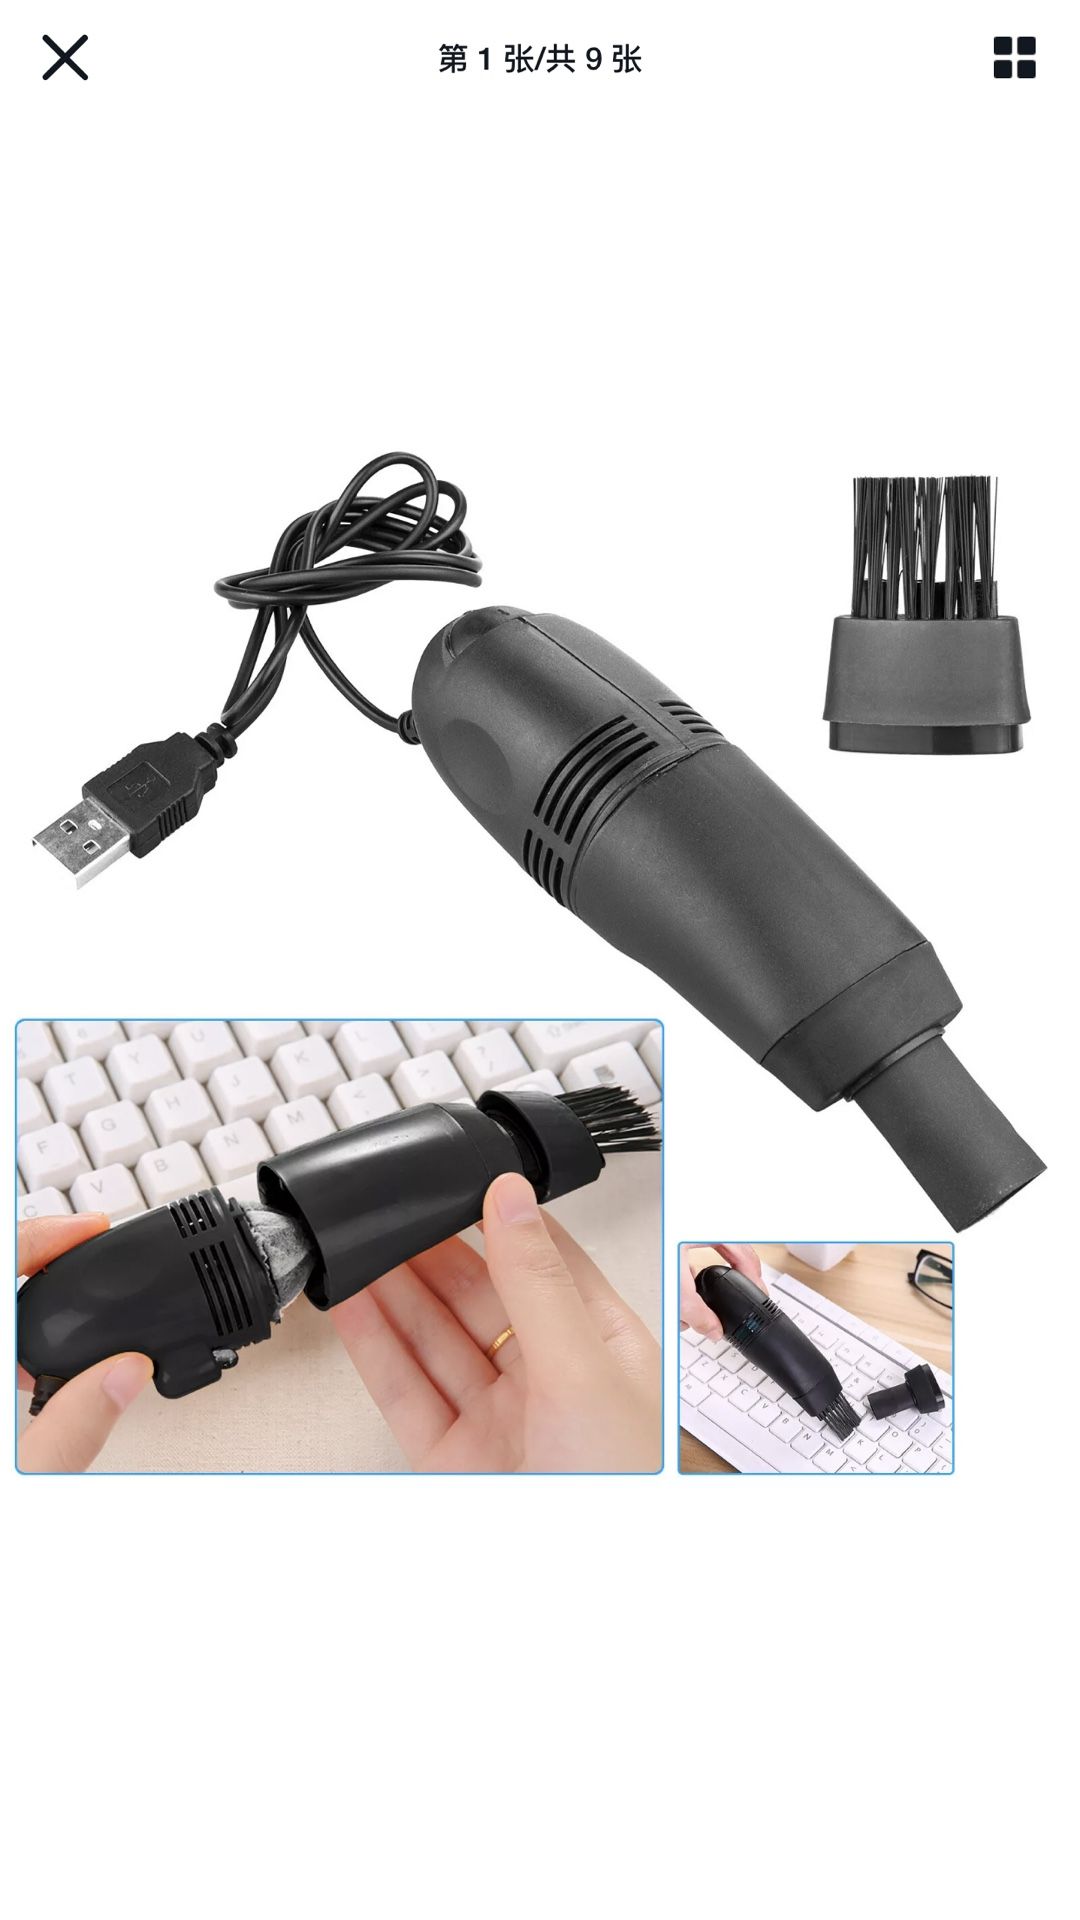 Mini USB Keyboard Vacuum Cleaner PC Laptop Computer Brush Dust Cleaning Kit